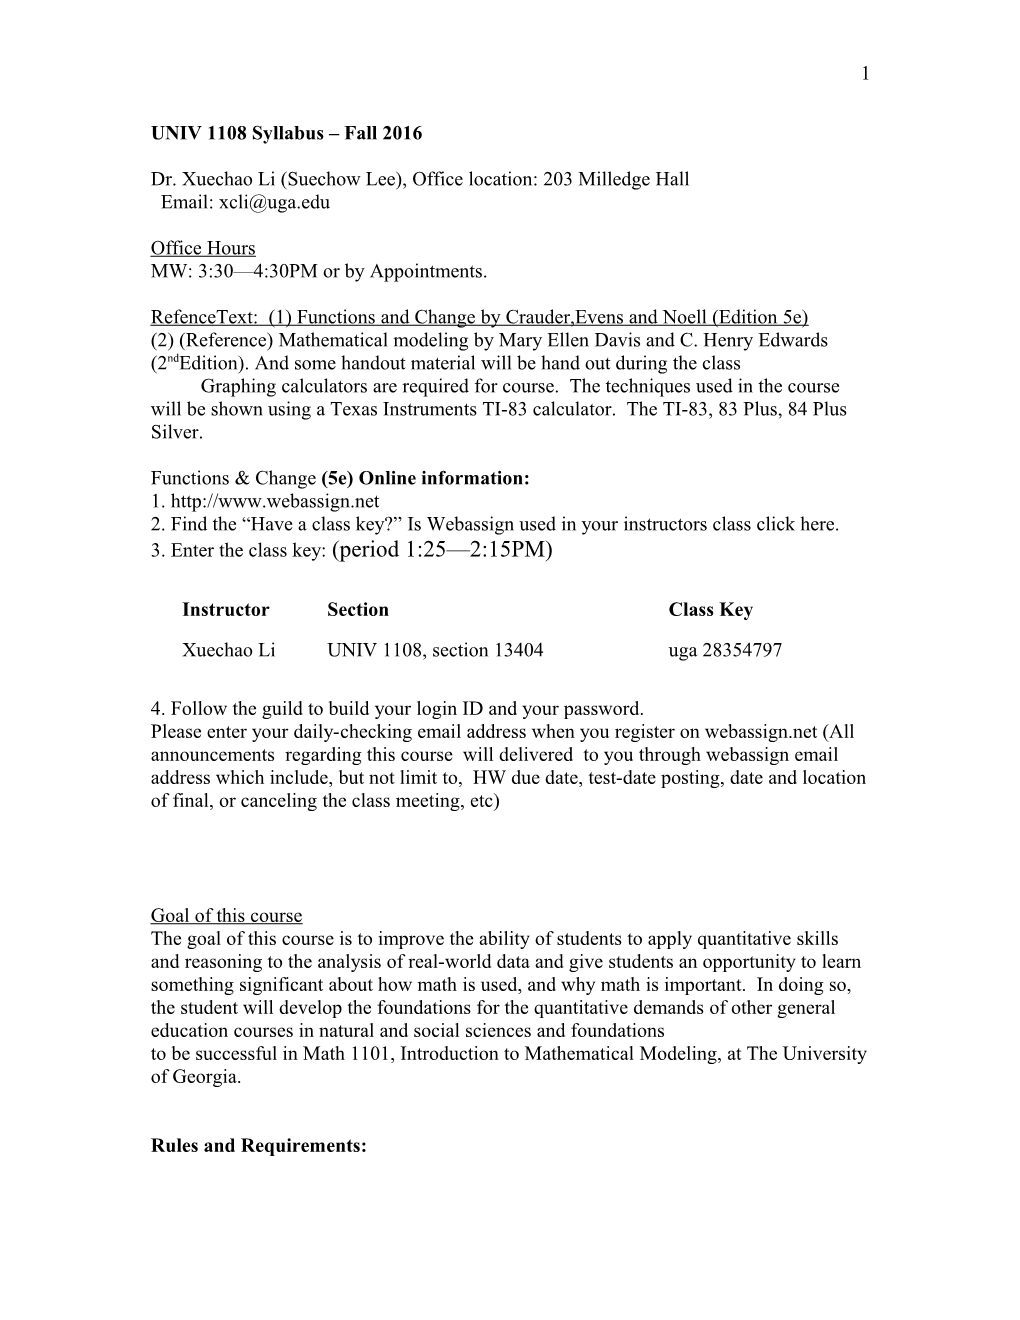 UNIV 1108 Syllabus Fall 2003